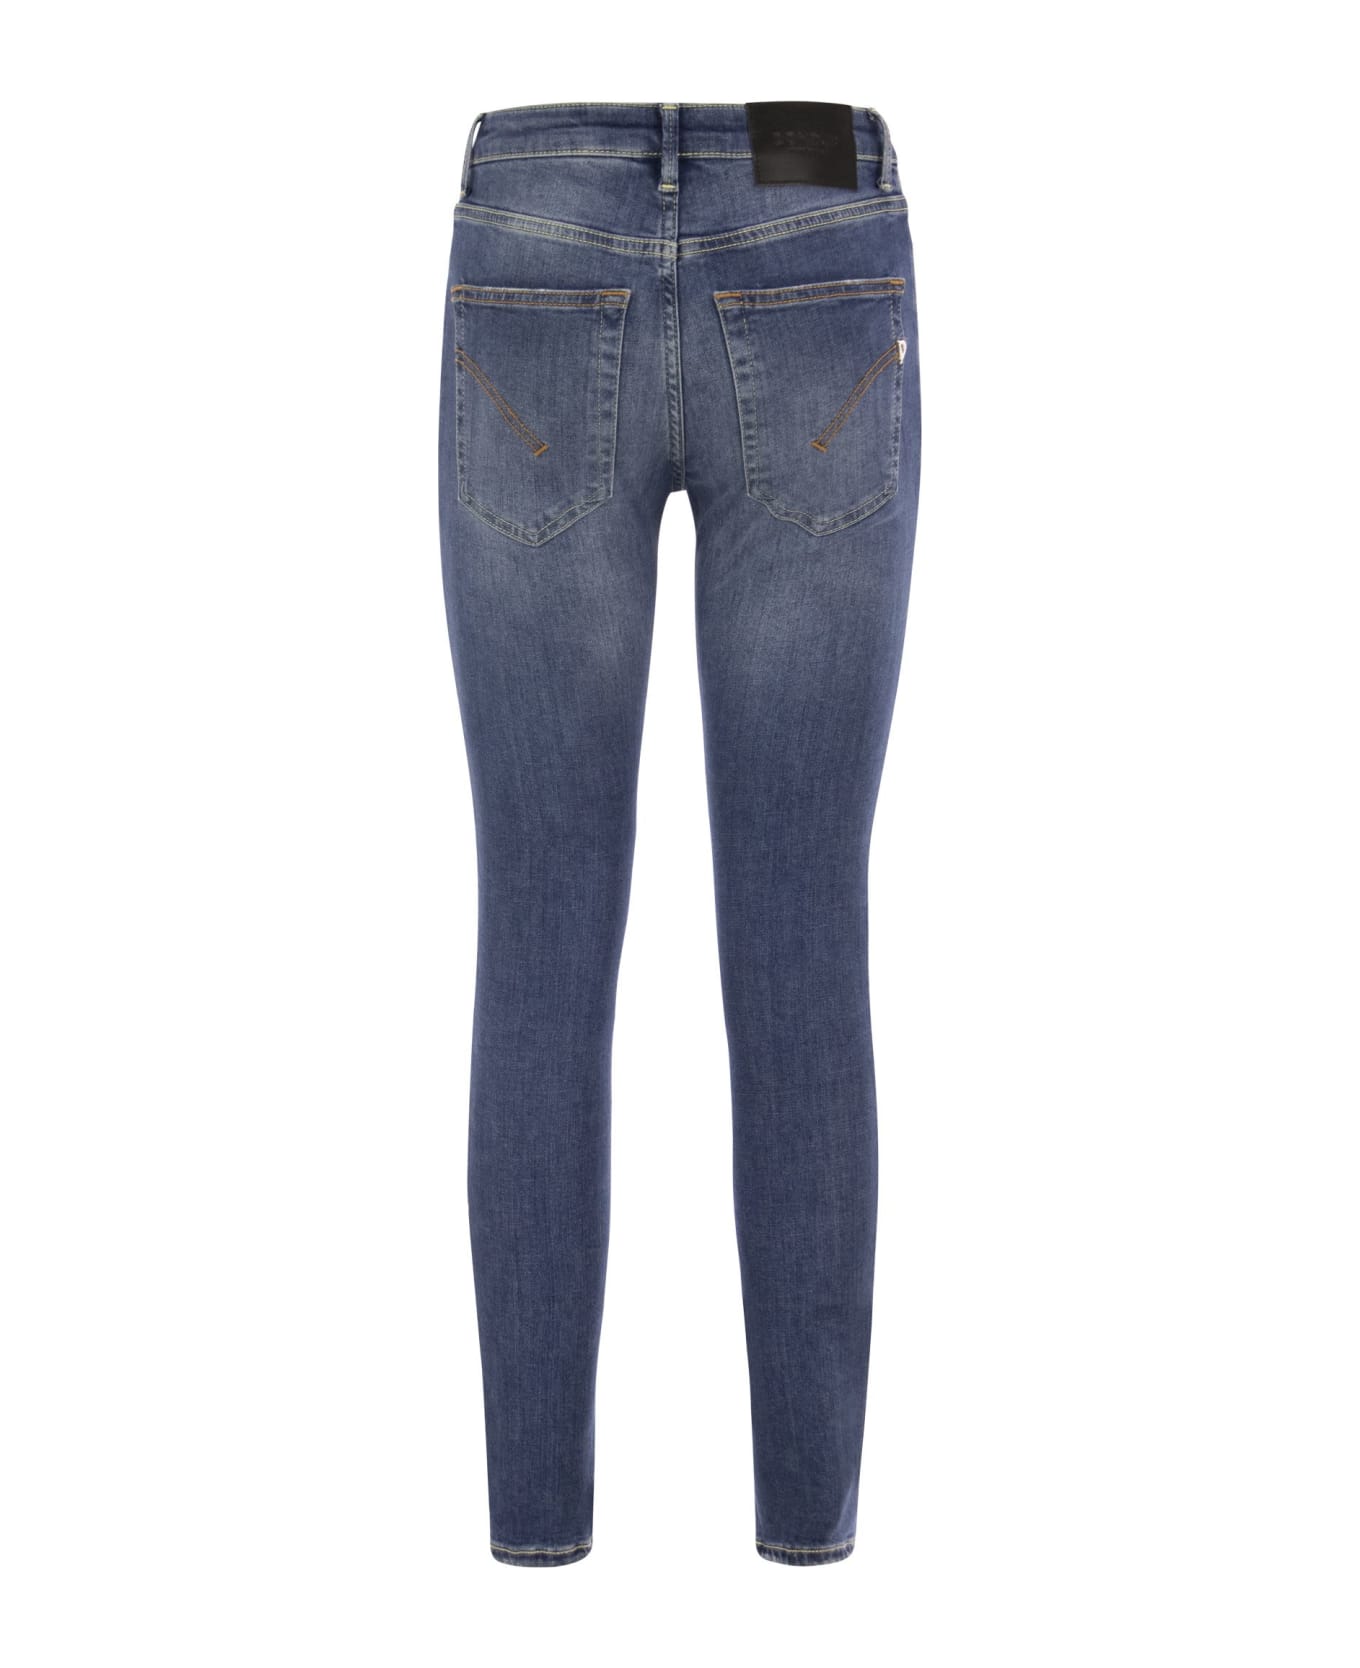 Dondup Iris - Jeans Skinny Fit - Denim Blue